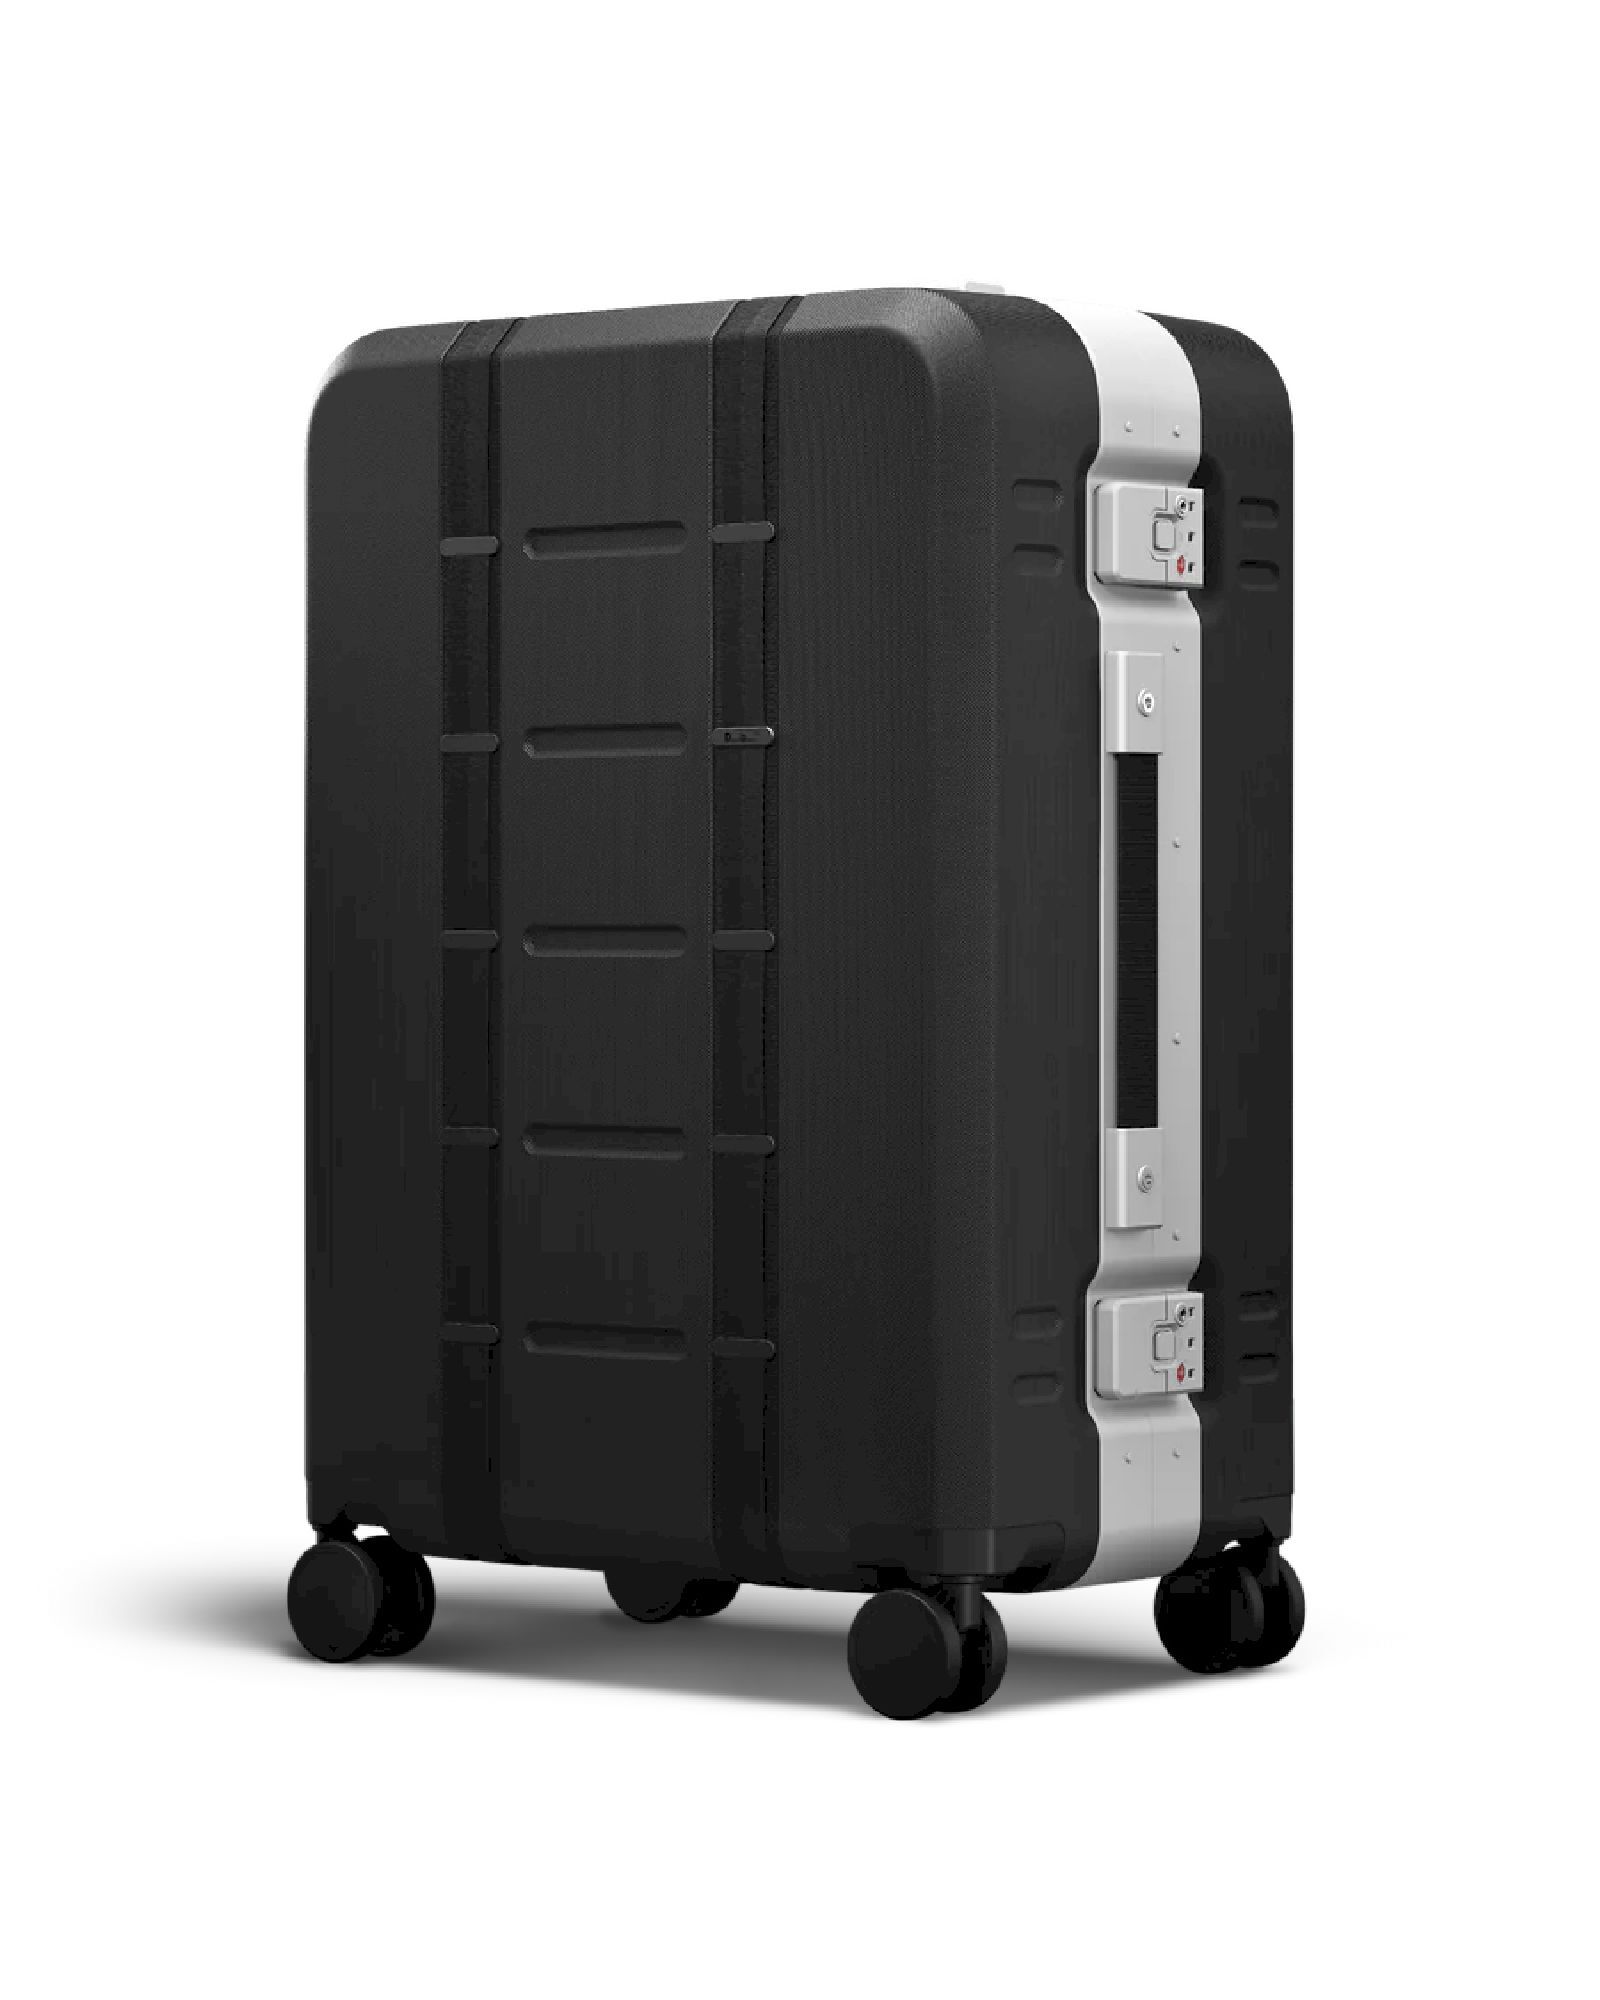 Db Journey The Ramverk Pro Medium Check-in Luggage - Travel backpack | Hardloop